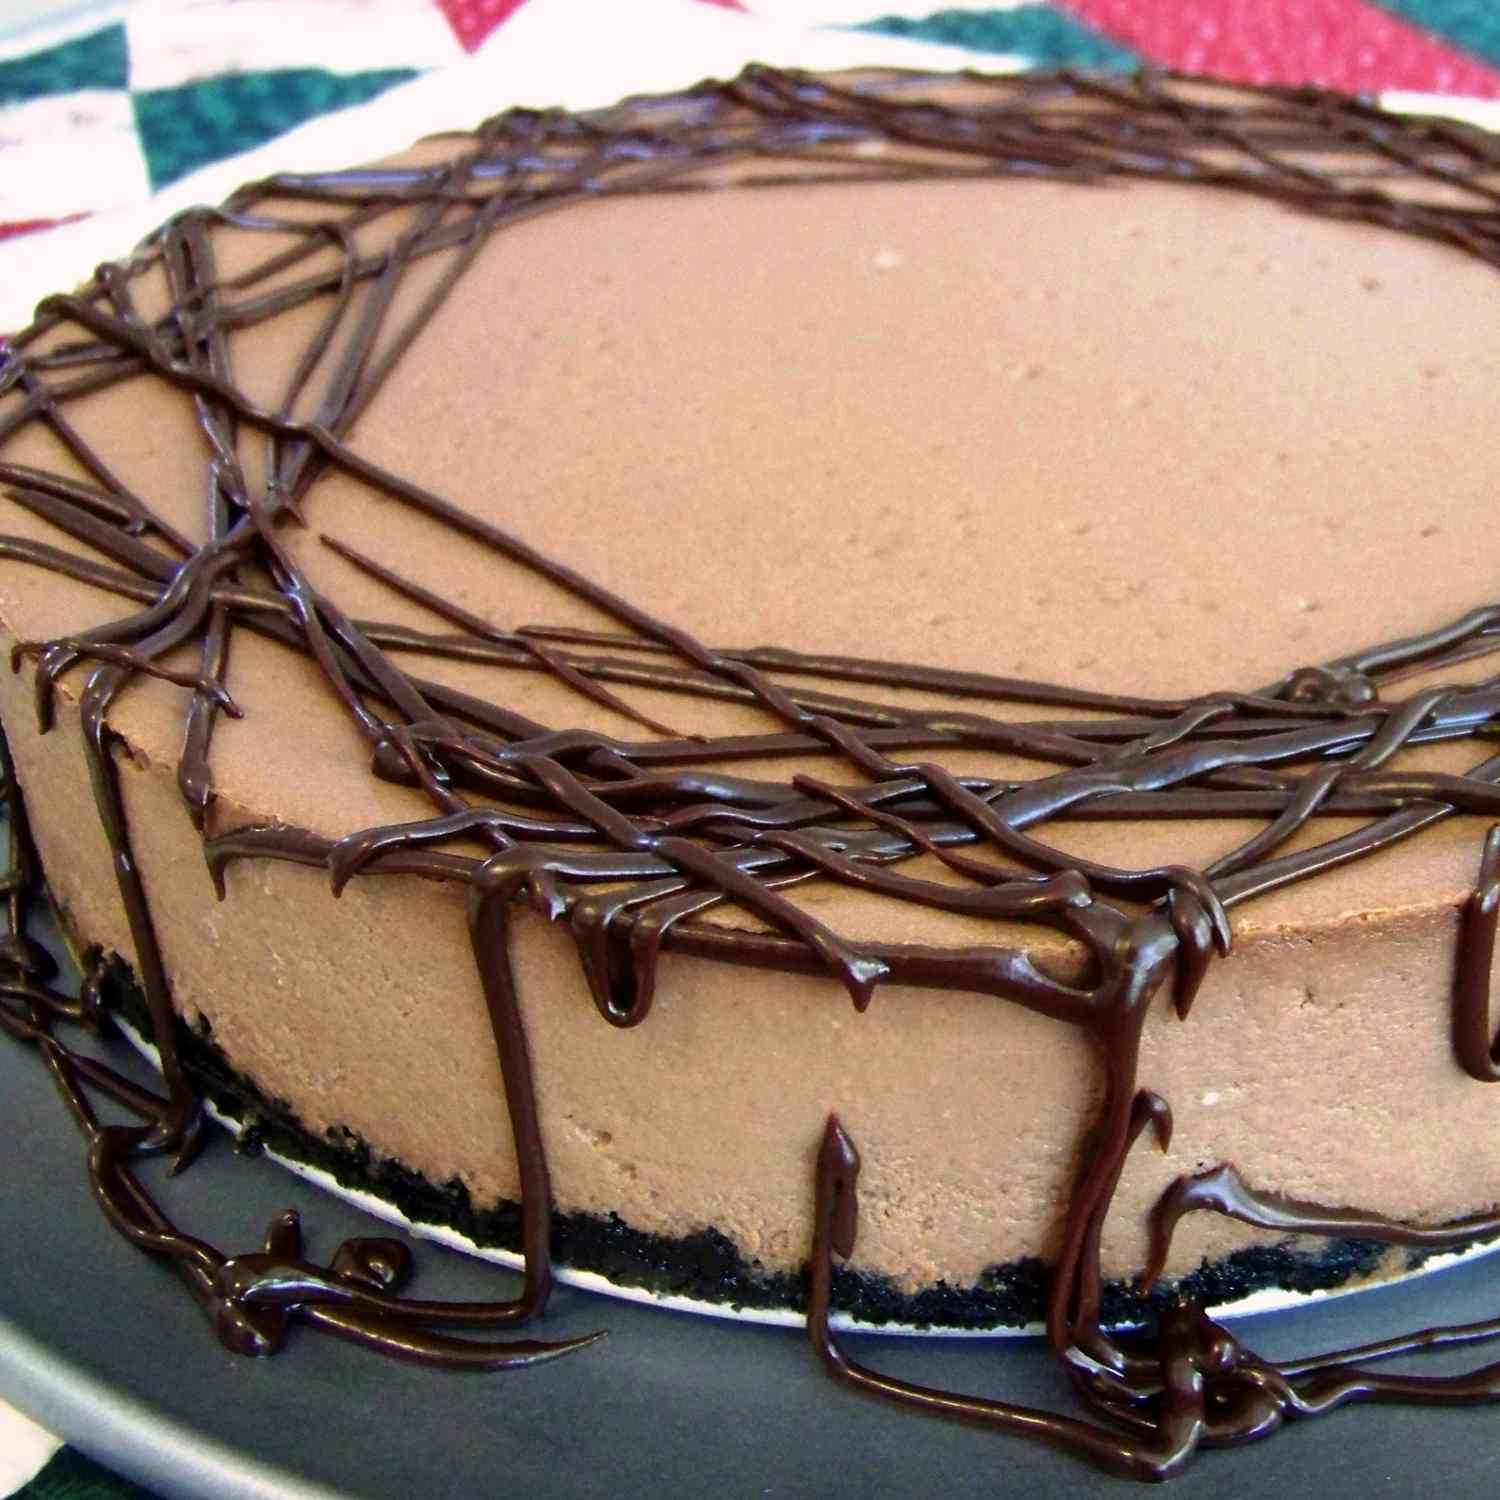 Chocolate Cappuccino Cheesecake